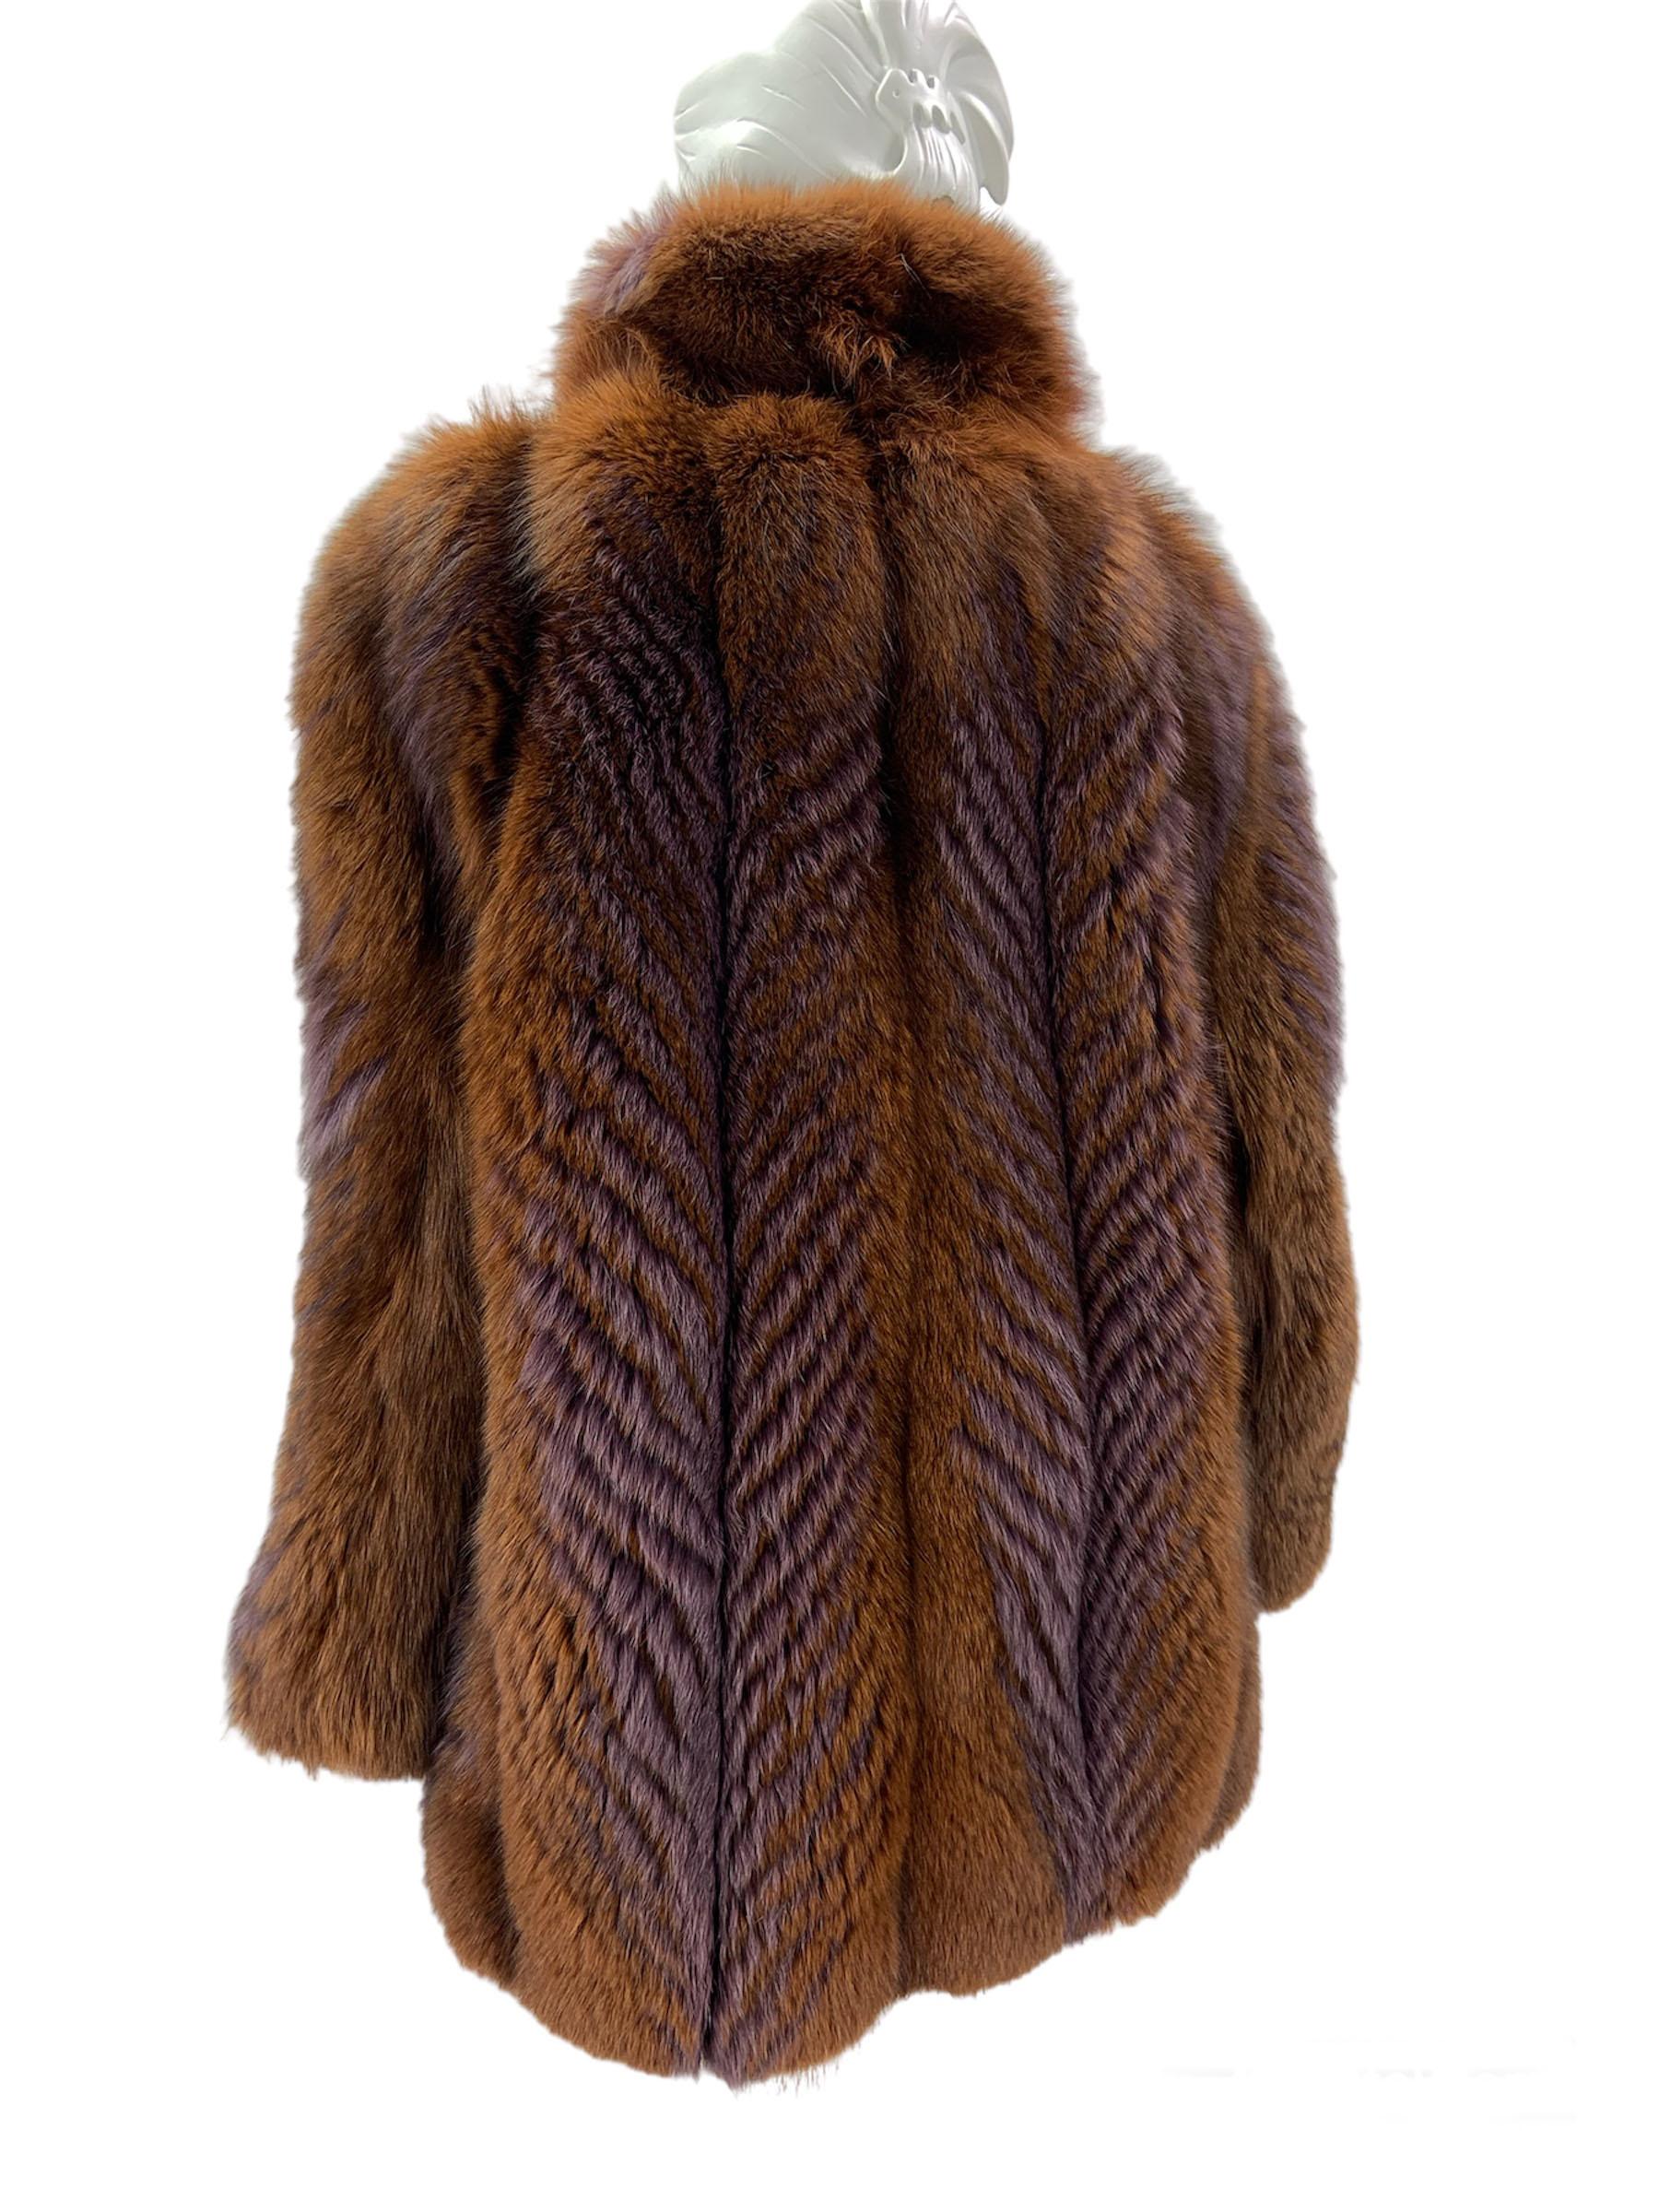 Oscar de la Renta Brown Fox Fur with Purple Feather Print Jacket Coat For Sale 3